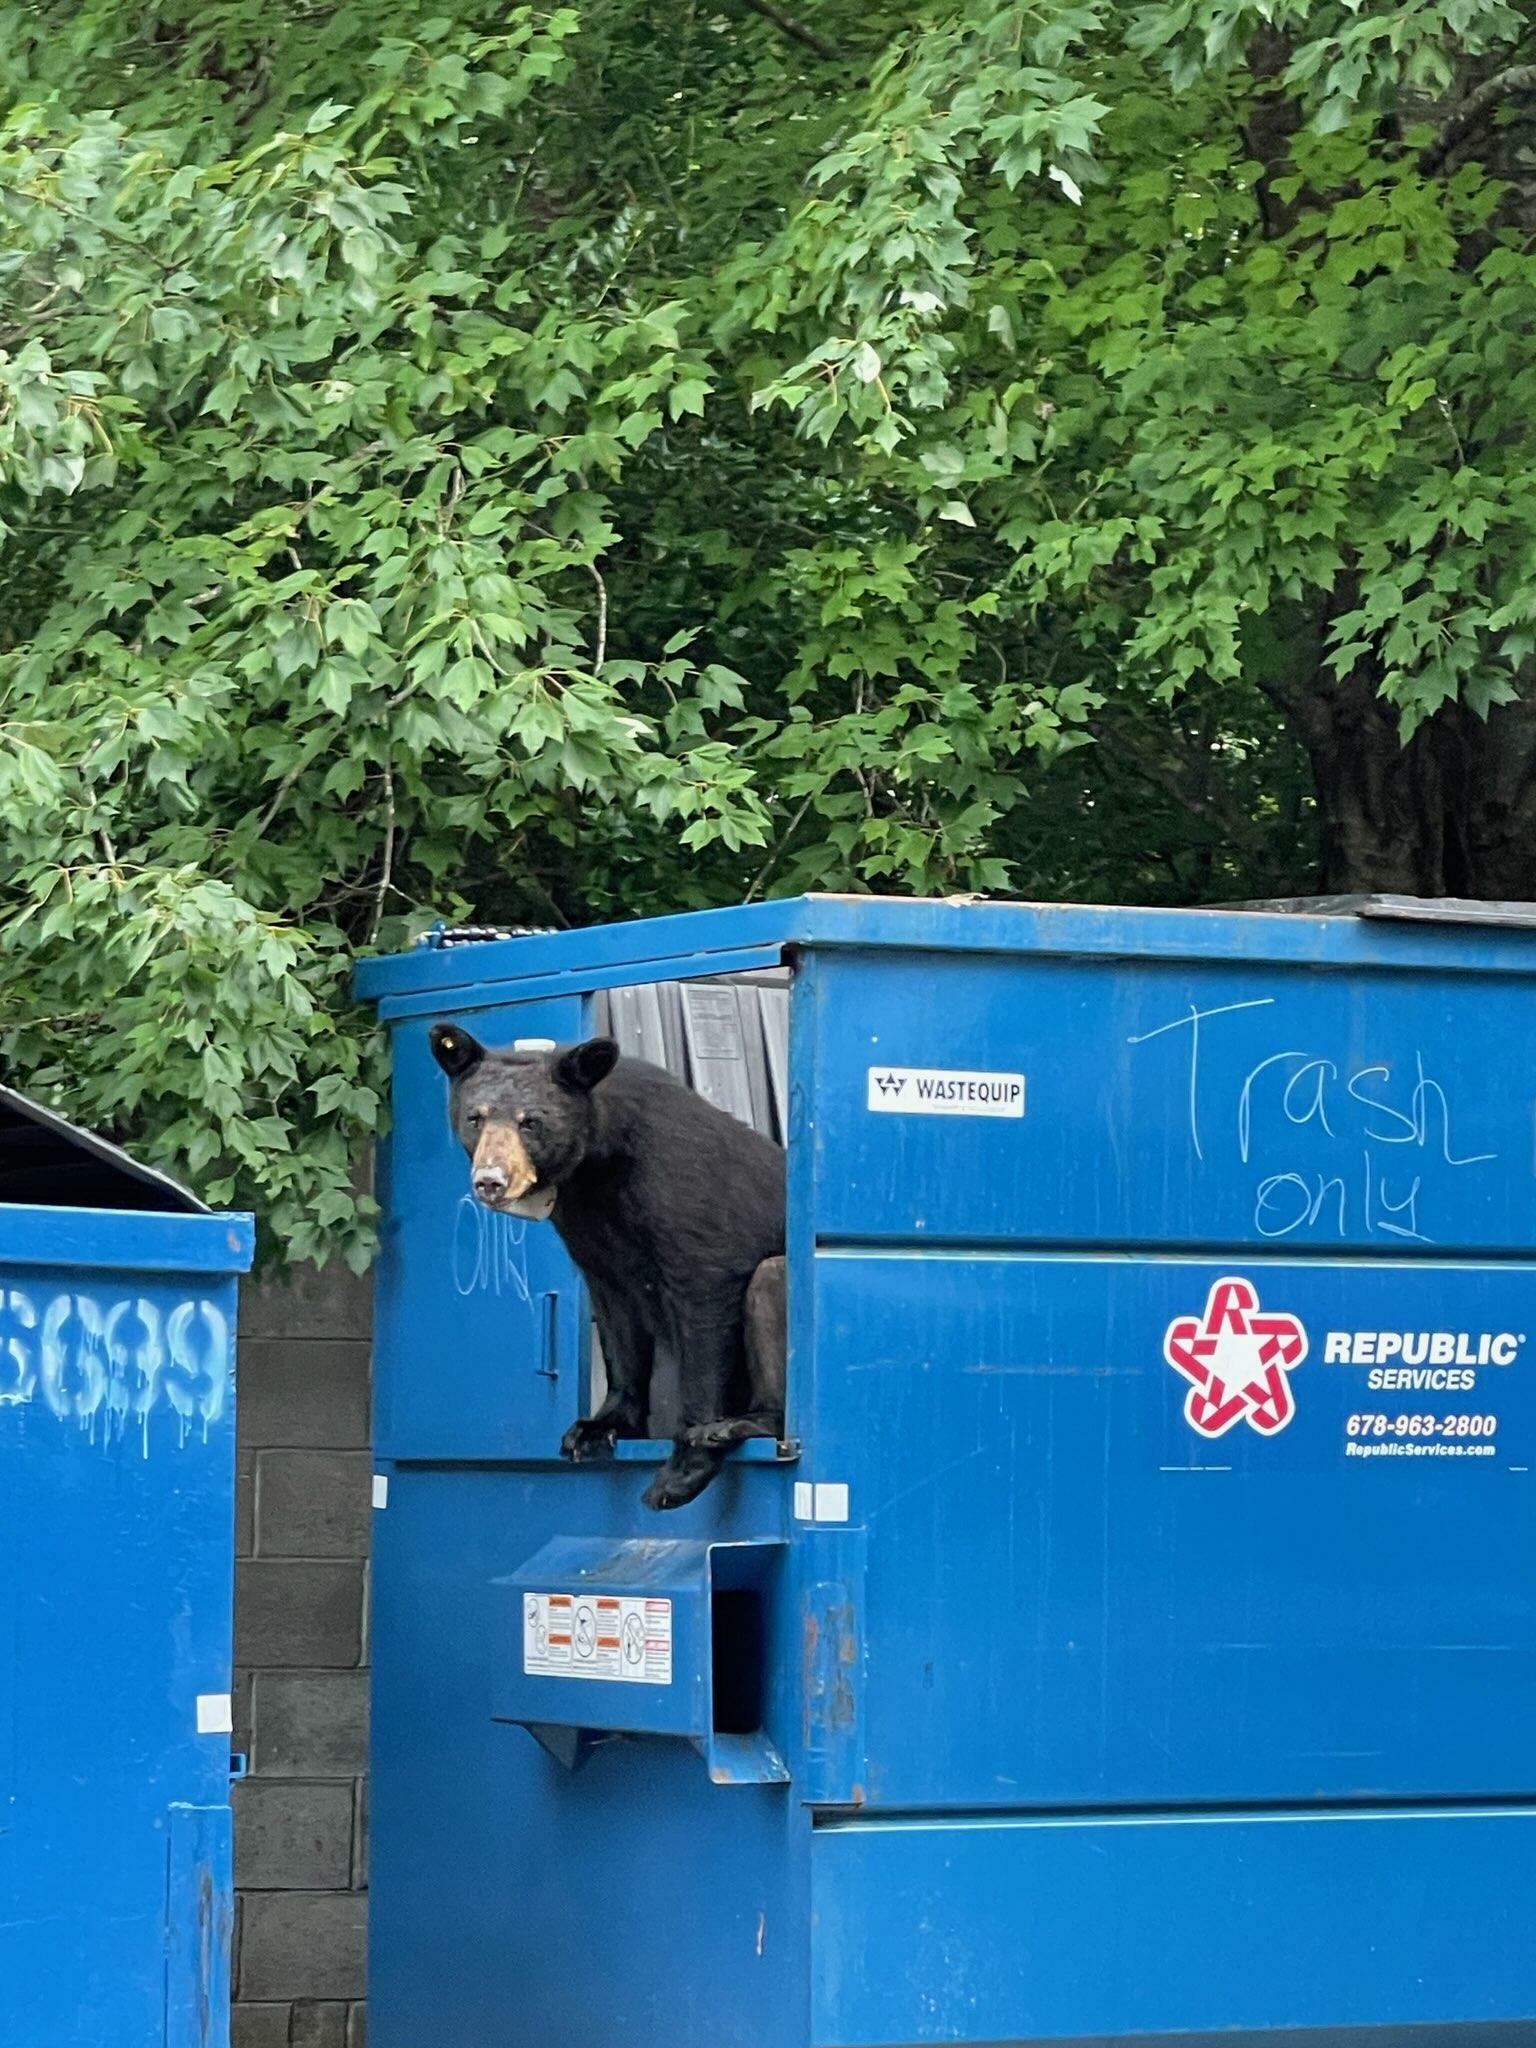 Bear 609 dumpster diving outside of a steakhouse in Alpharetta, Georgia in July 2022